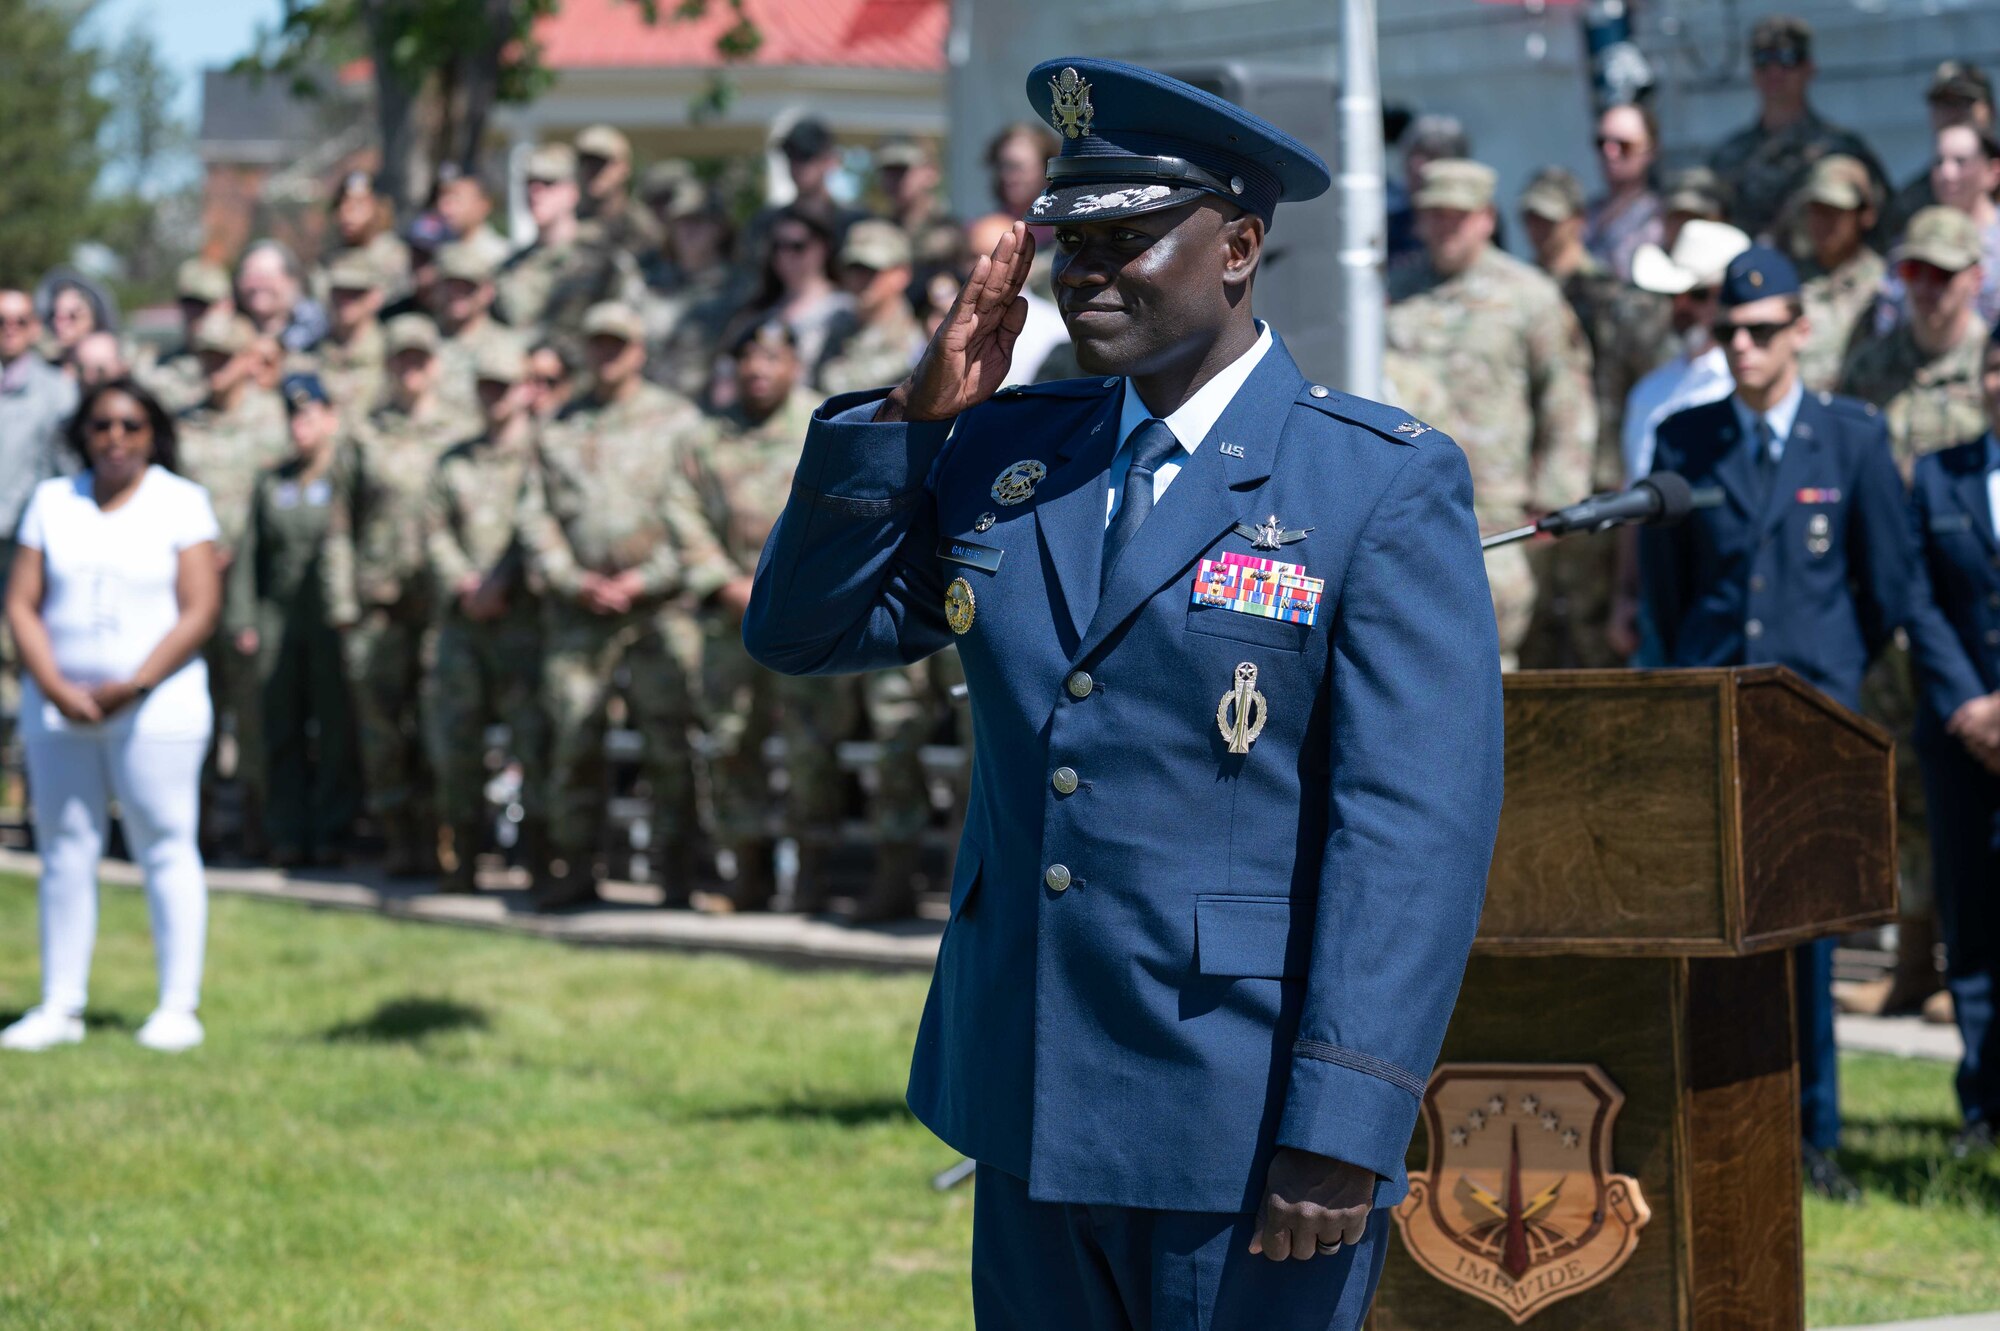 Col. Galbert salutes 90th Missile Wing Airmen.